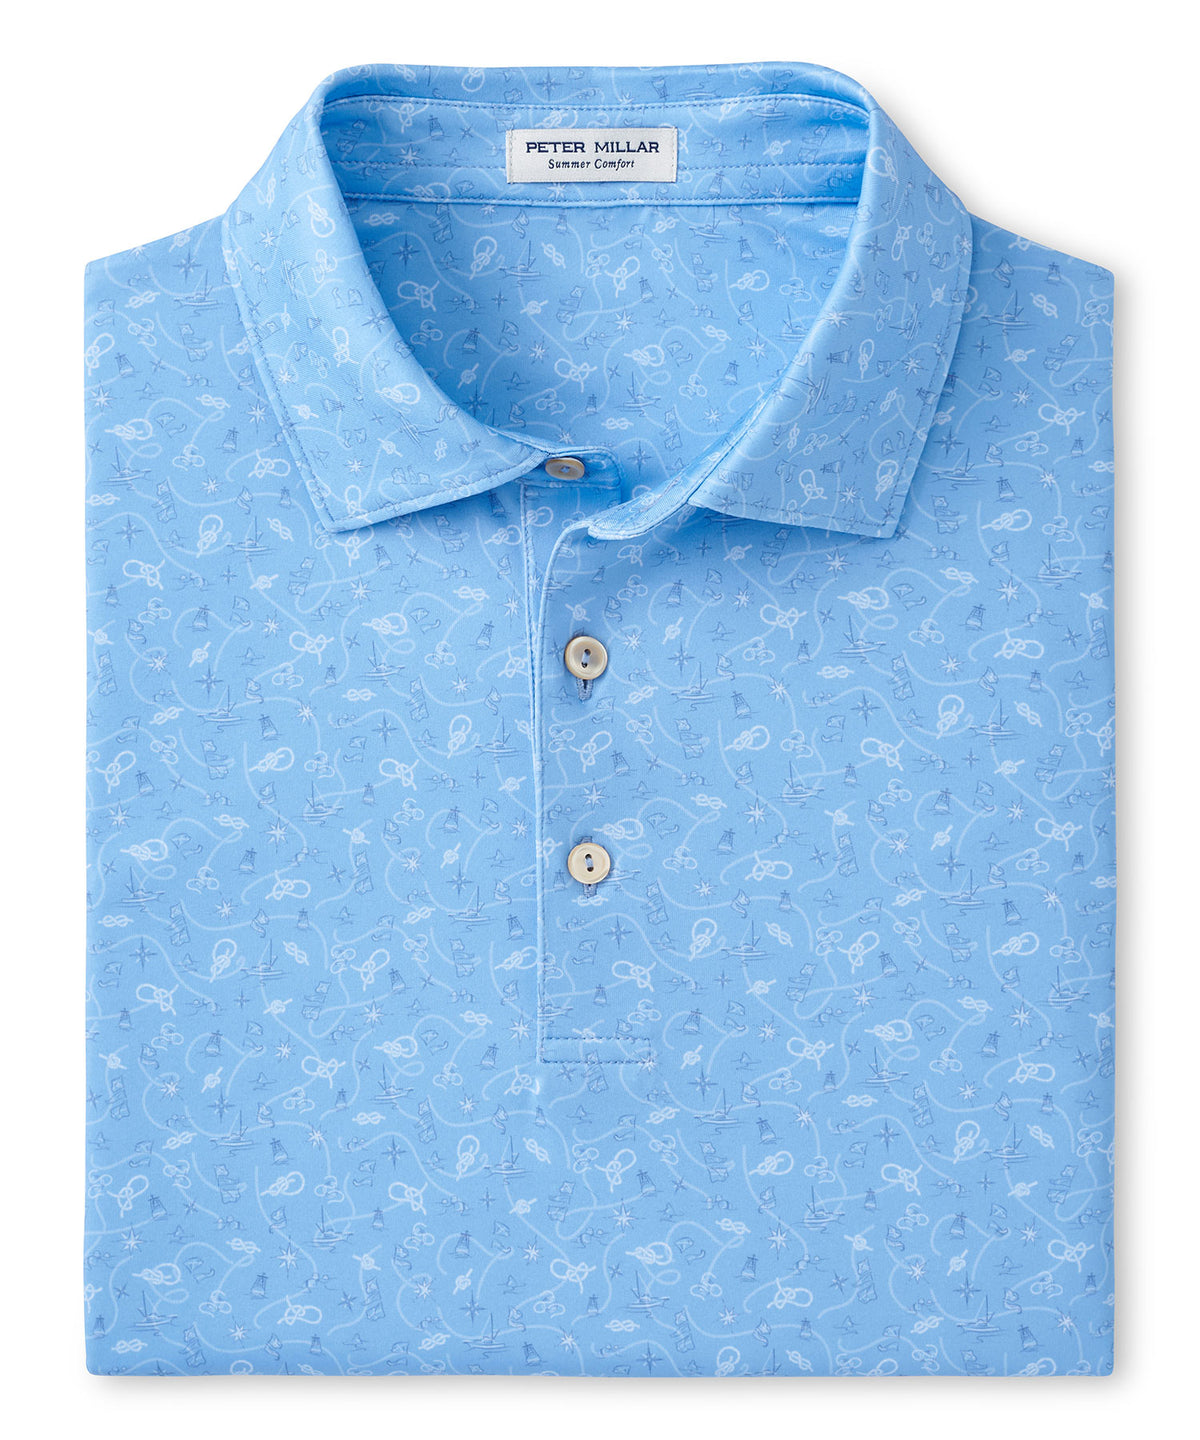 Peter Millar Short Sleeve Nautical Print Polo Knit Shirt, Big & Tall